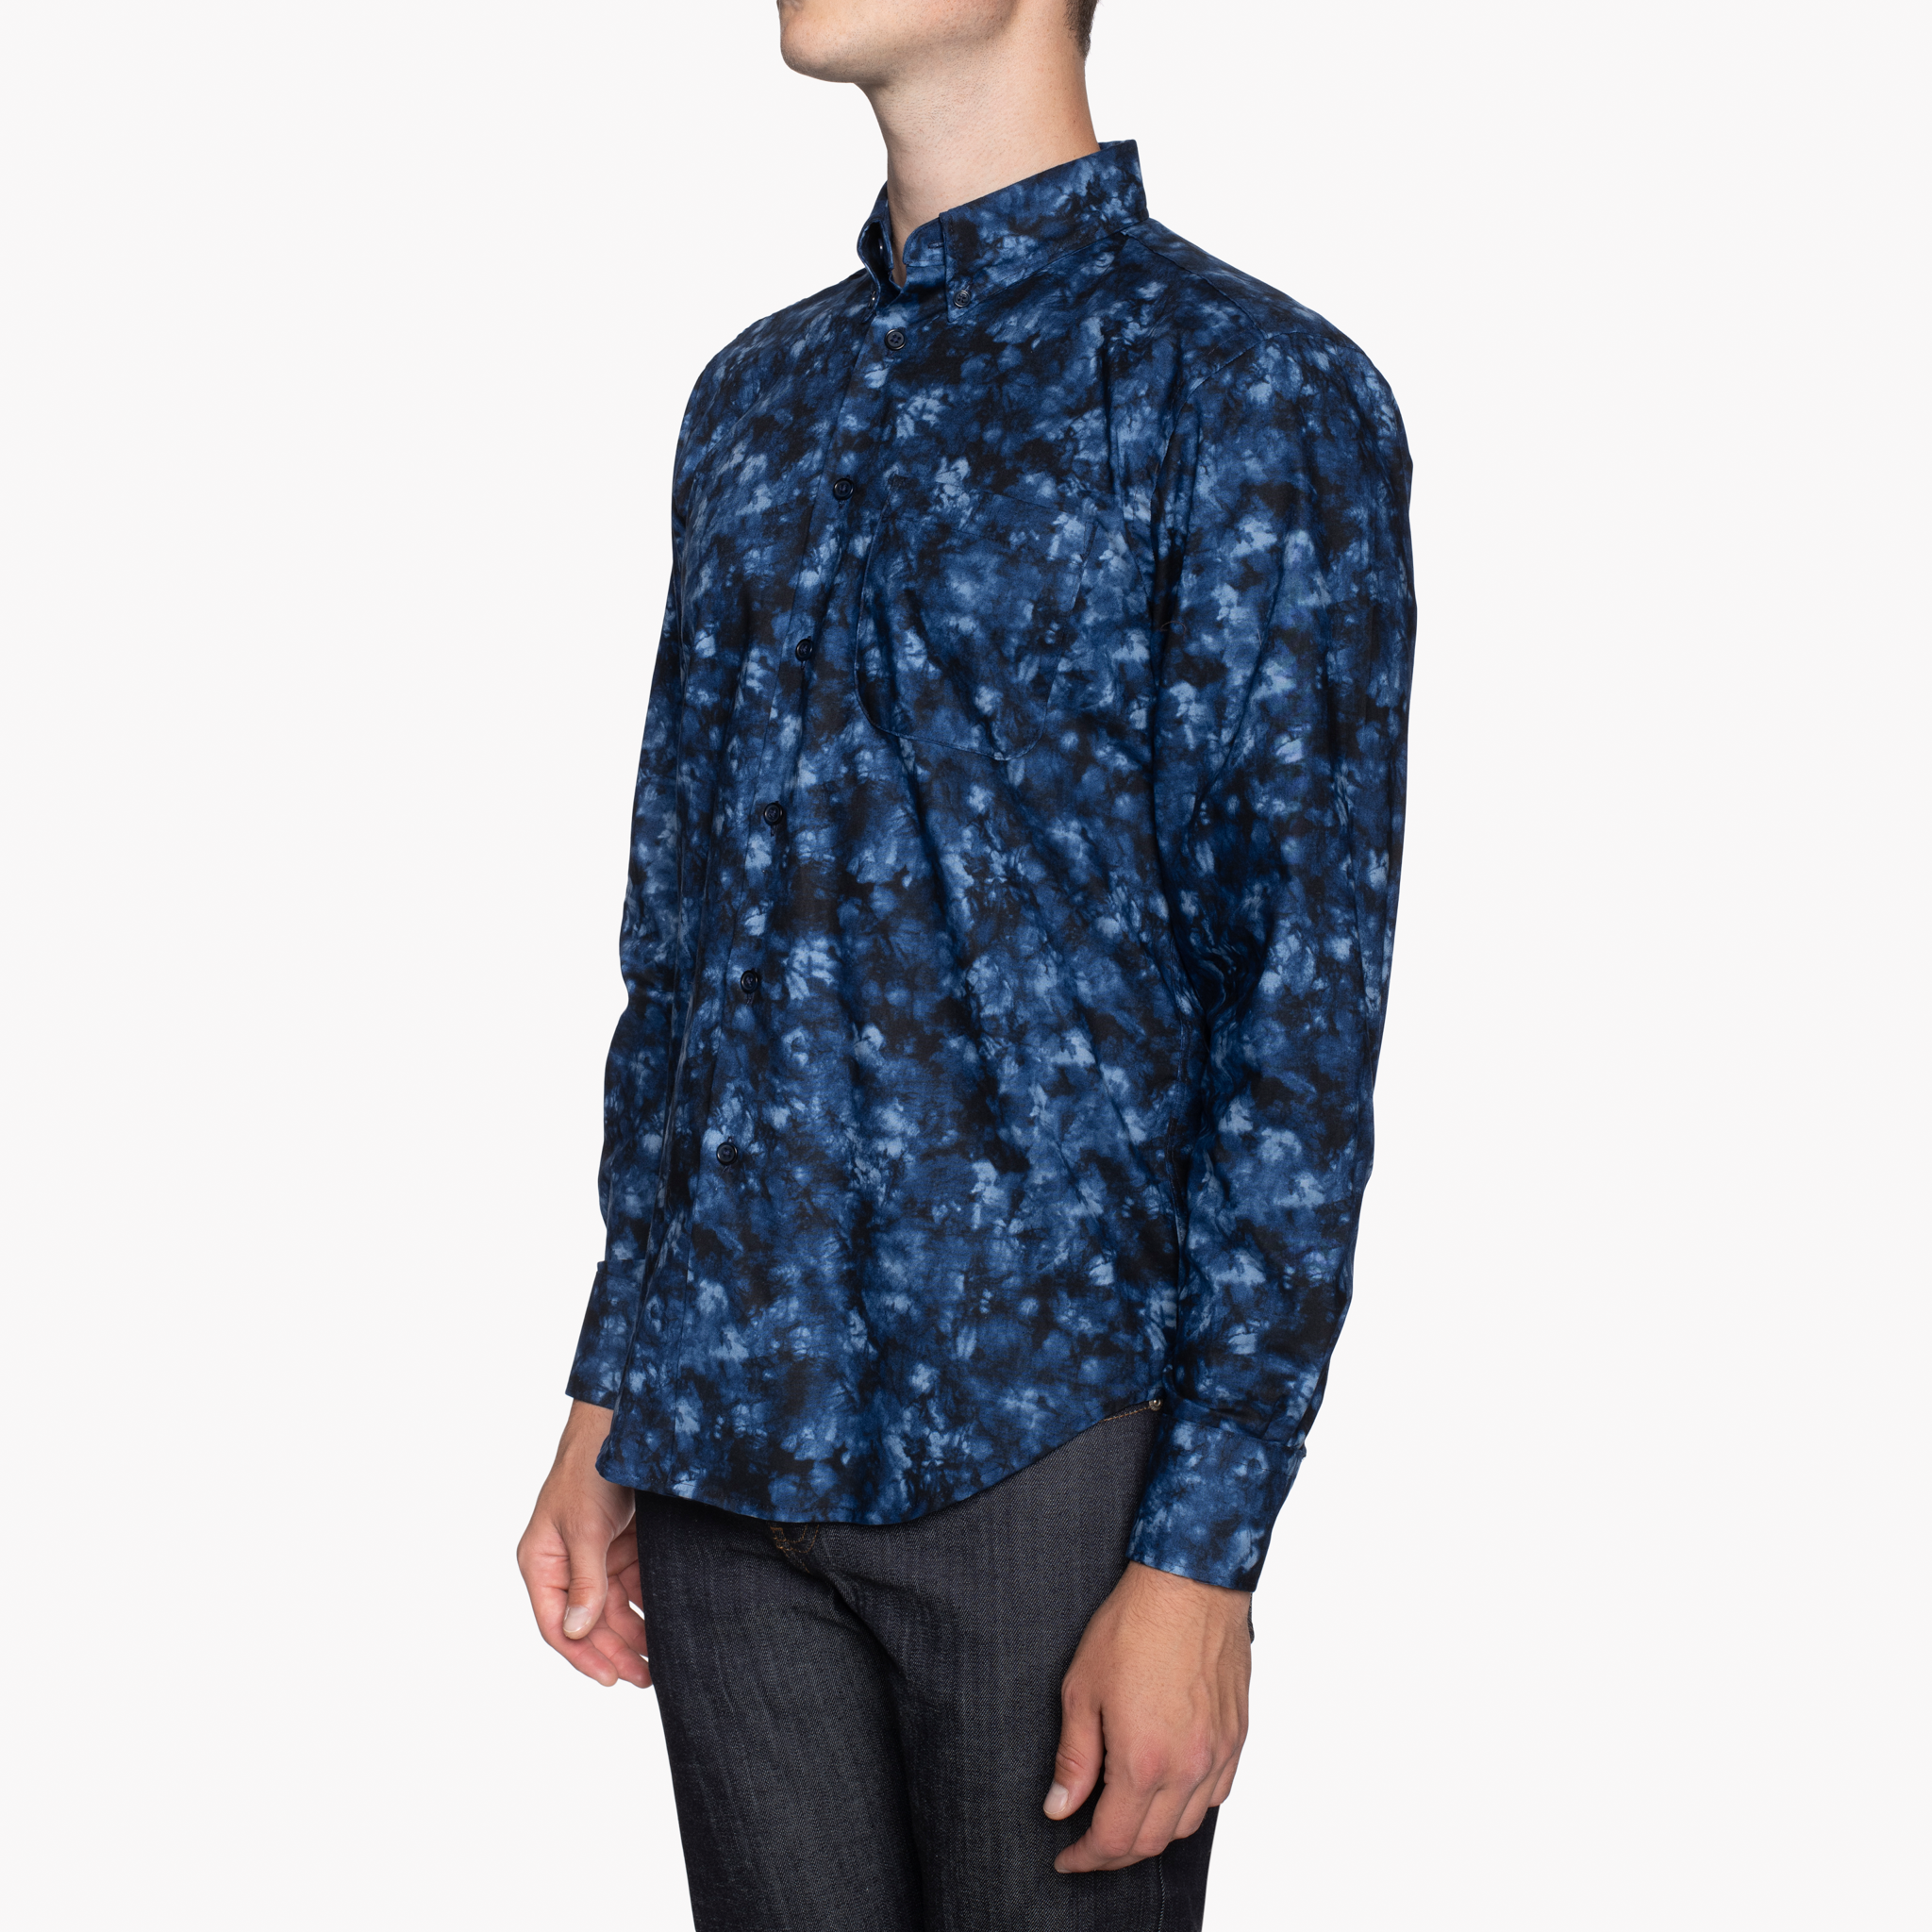  Easy Shirt - Tie Dye Print - Dark Blue - side 